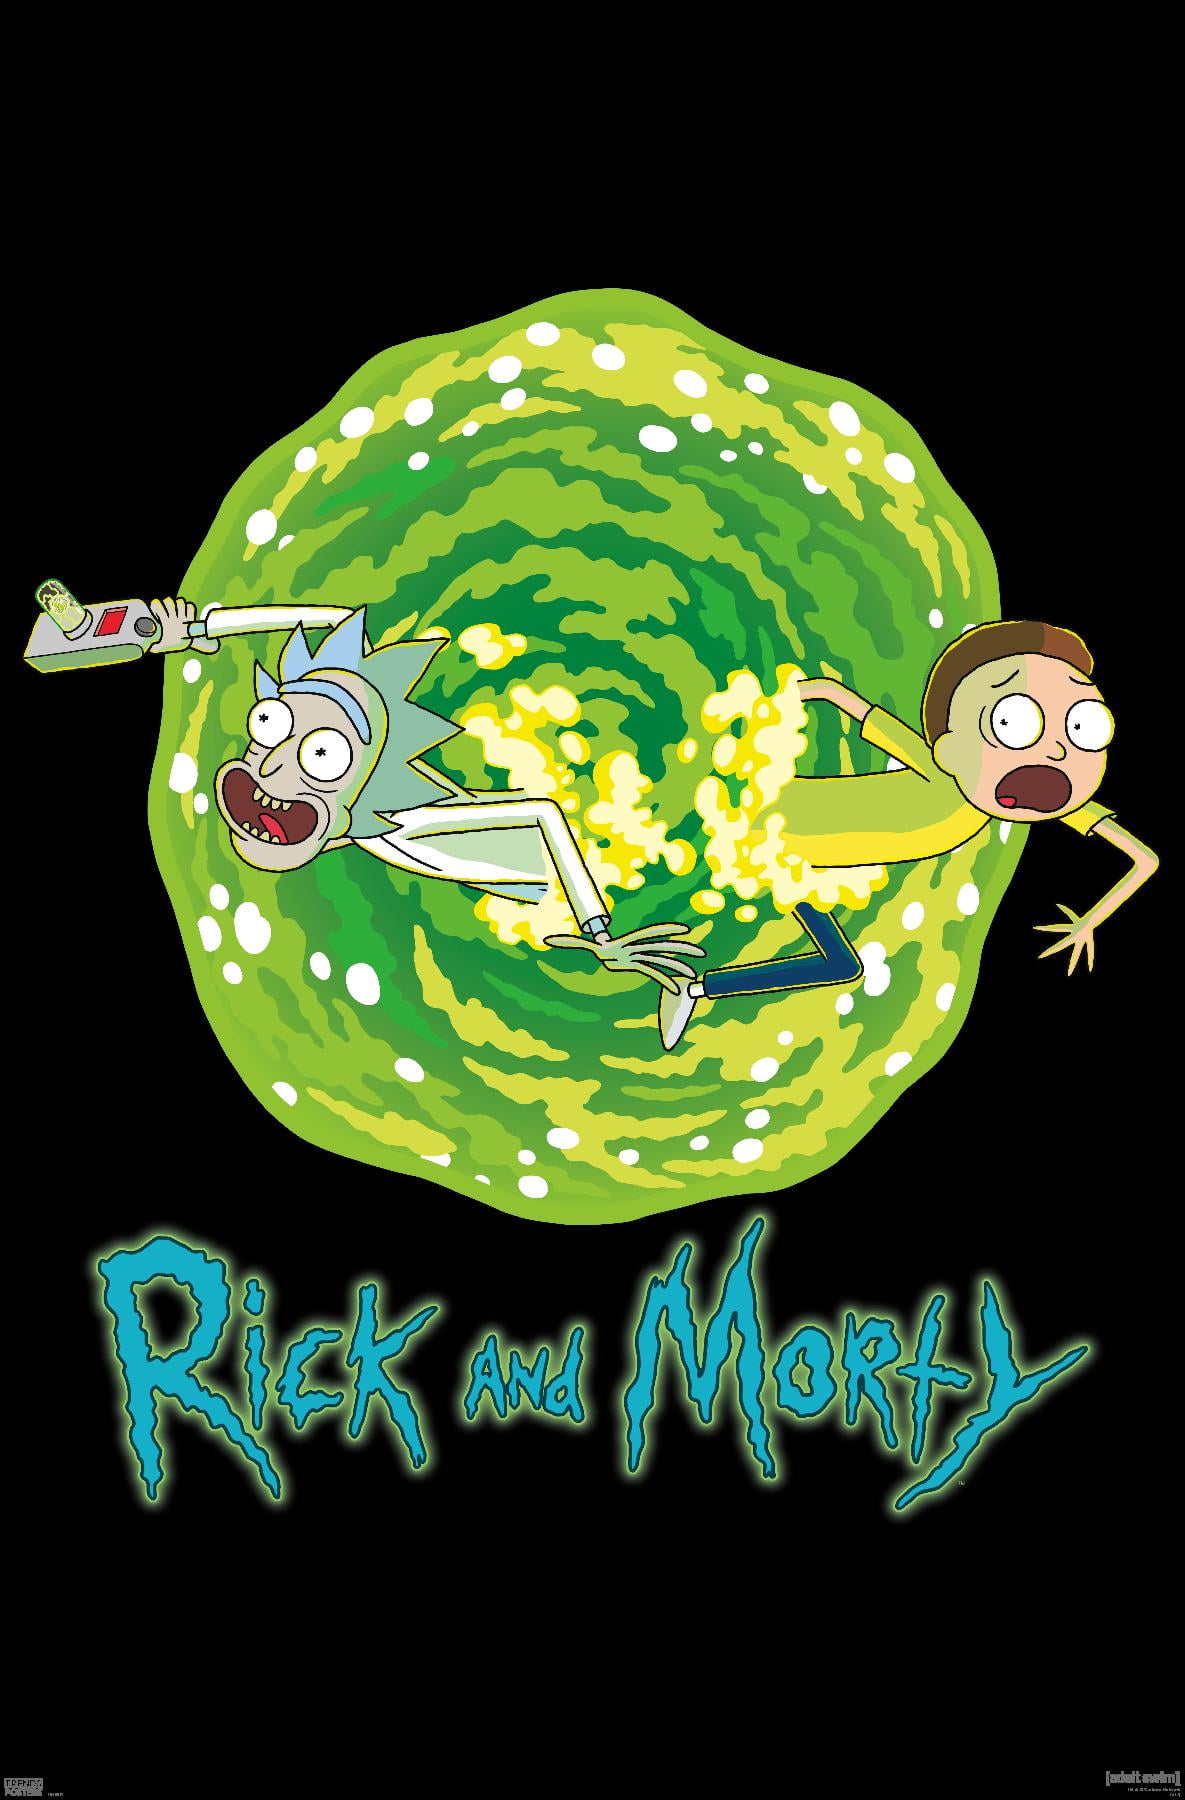  Rick and Morty